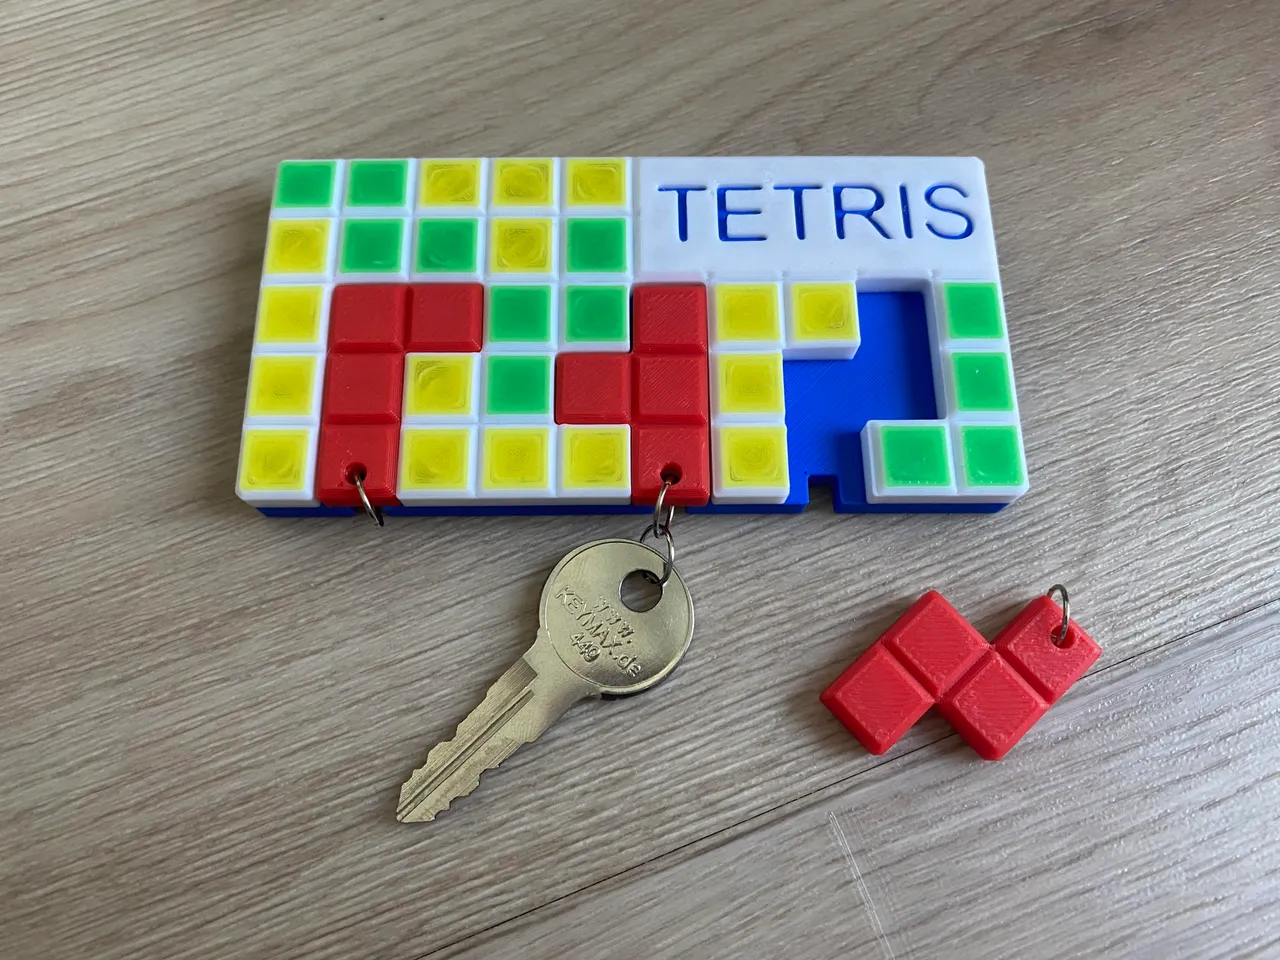 Tutustu 56+ imagen tetris key